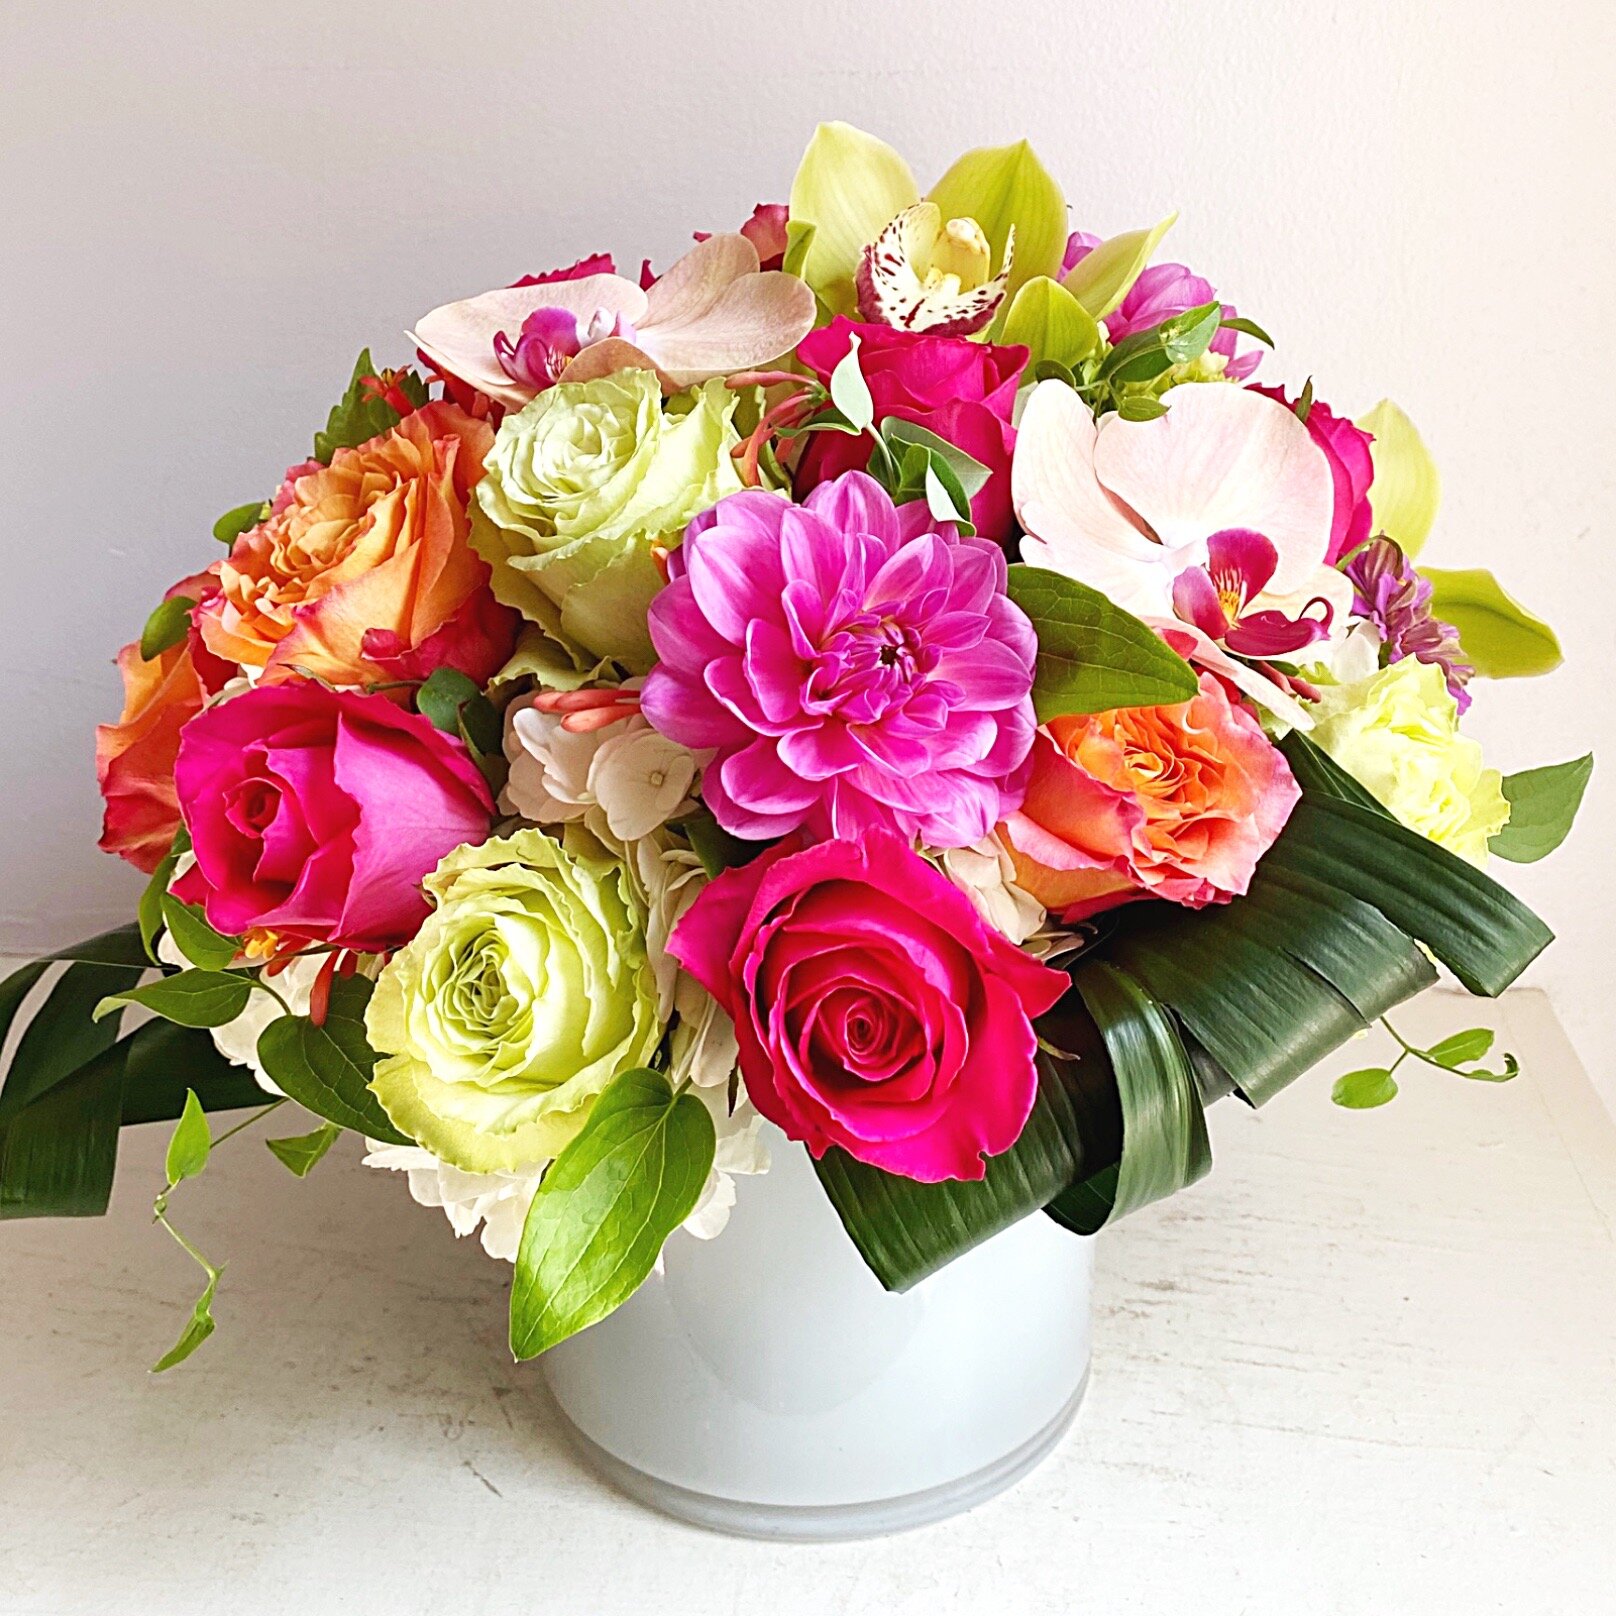 Modern flower design in bright colors - Atelier Ashley Flowers